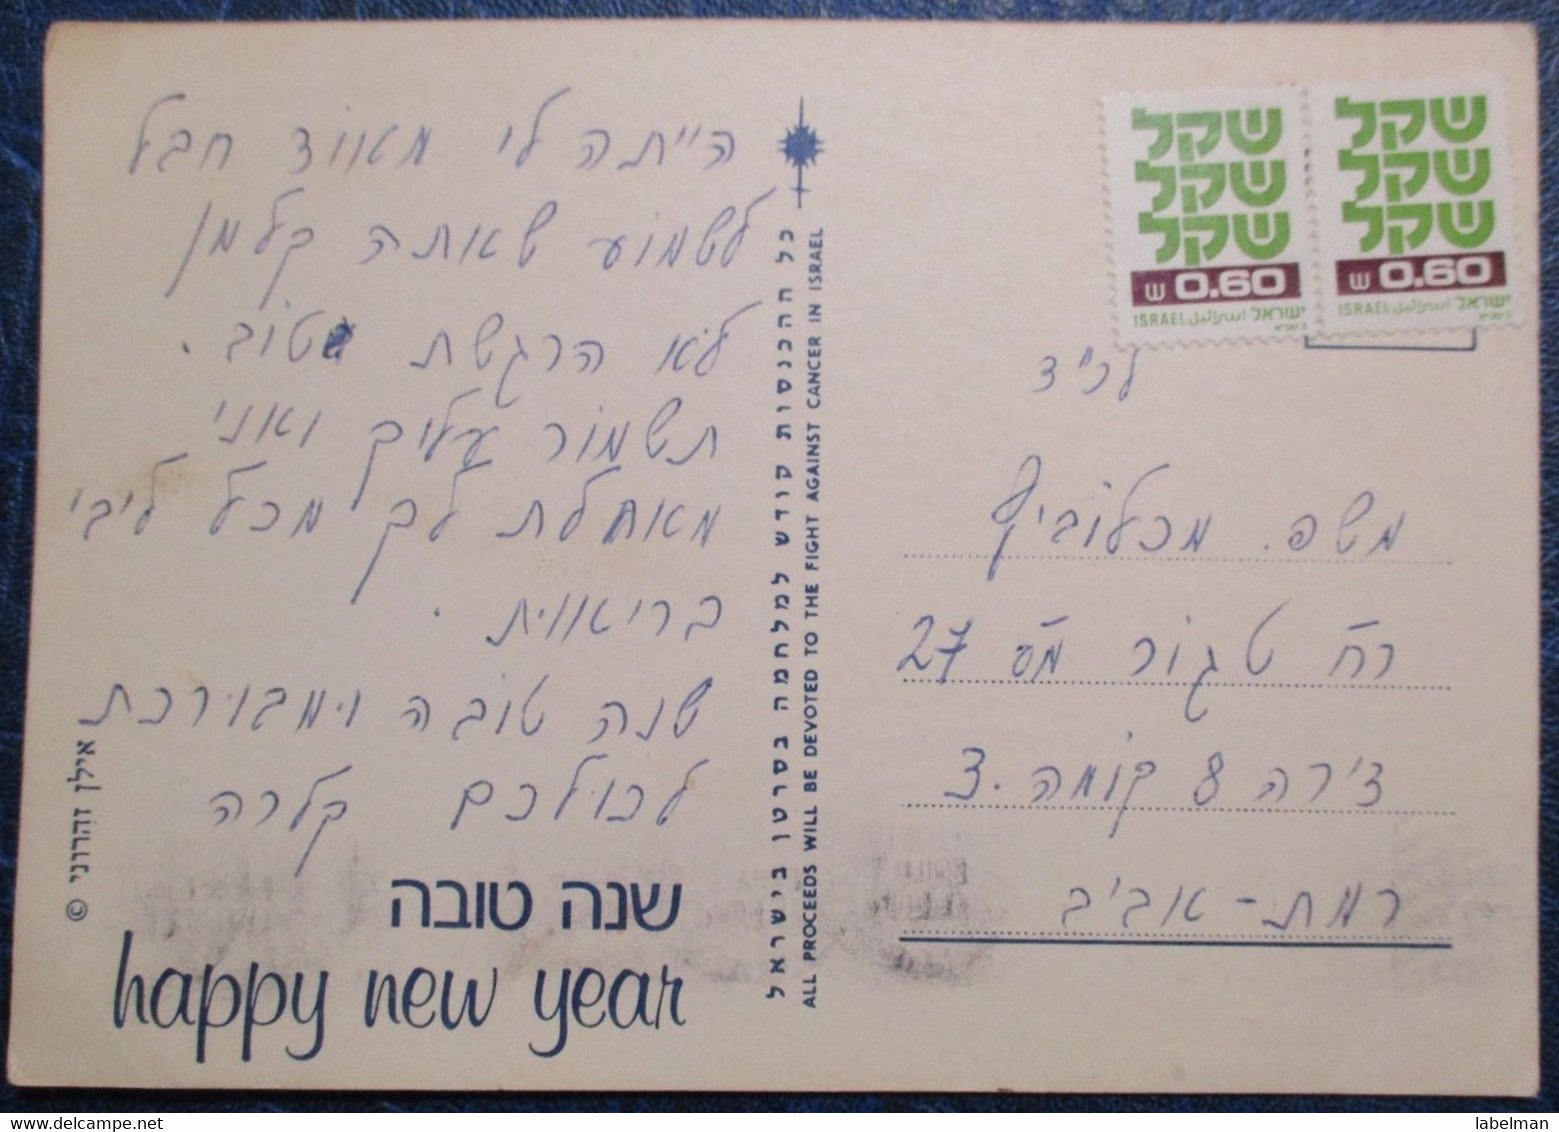 ISRAEL FIGHT CANCER ASSOCIATION SHANA TOVA NEW YEAR JUDAICA PC ILAN ZAARONI GILAD CARD POSTCARD CARTOLINA ANSICHTSKARTE - Nouvel An